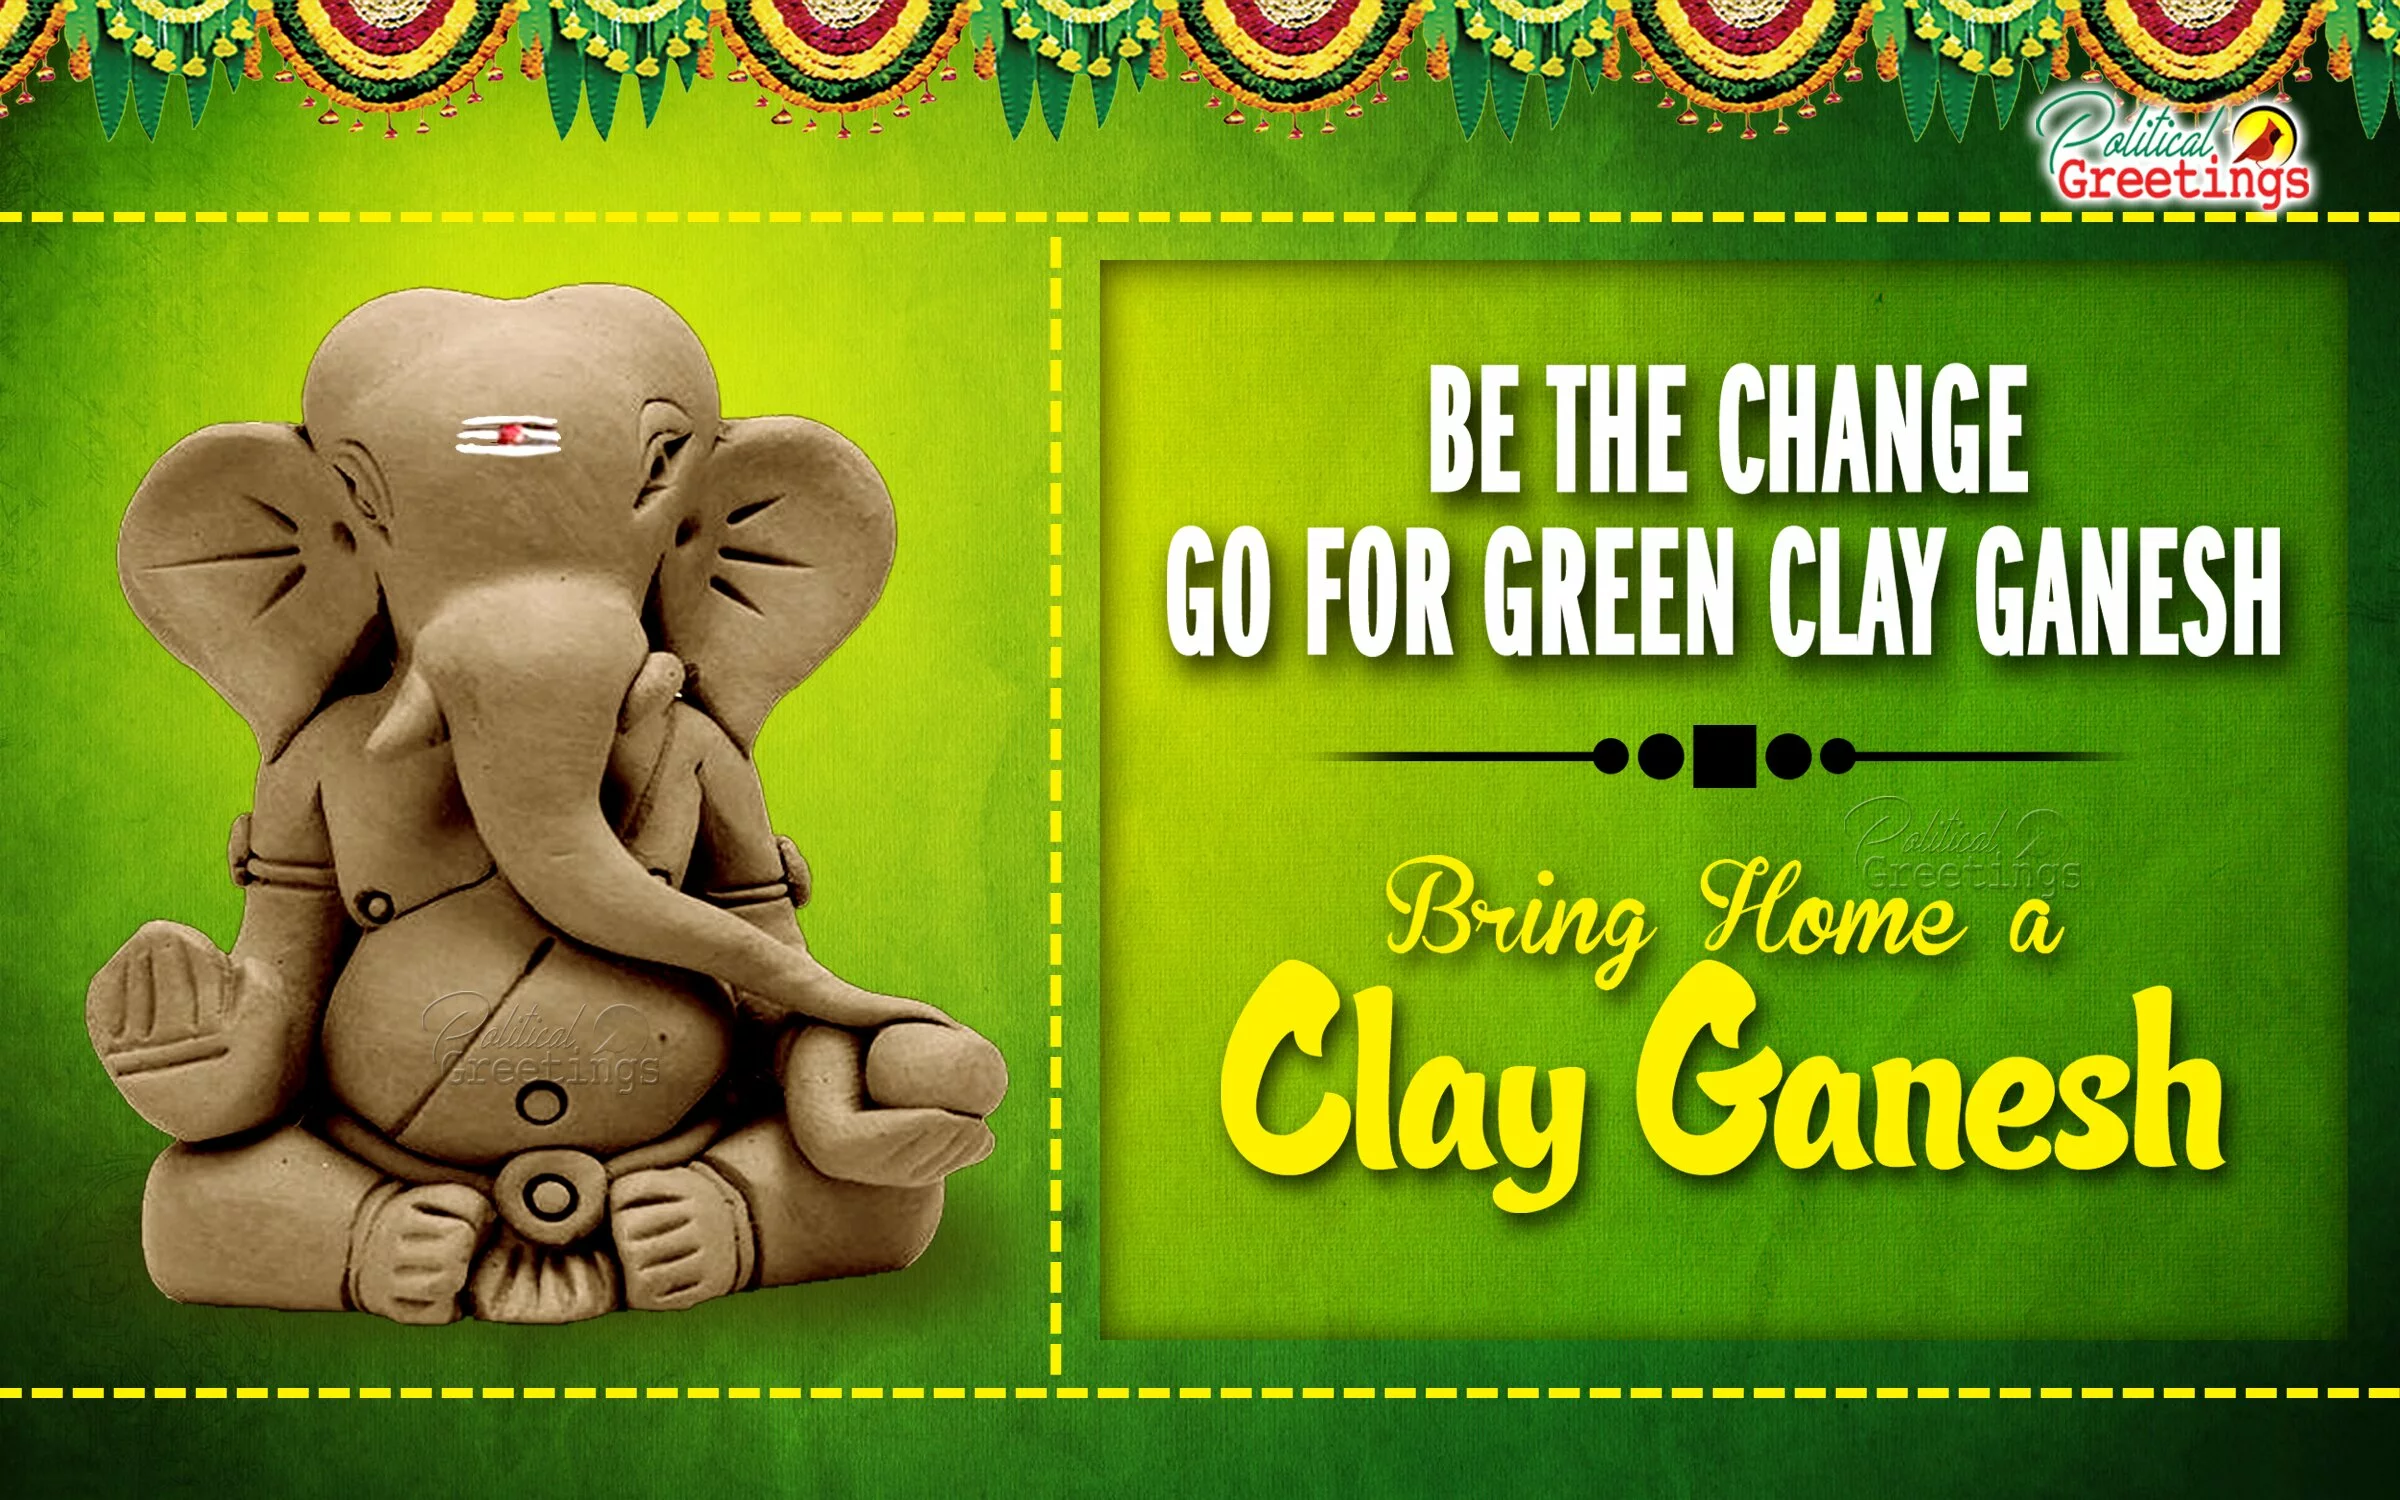 clay ganesha posters and wallpapers in telugu language - eco friendly ganesh chaturthi telugu images